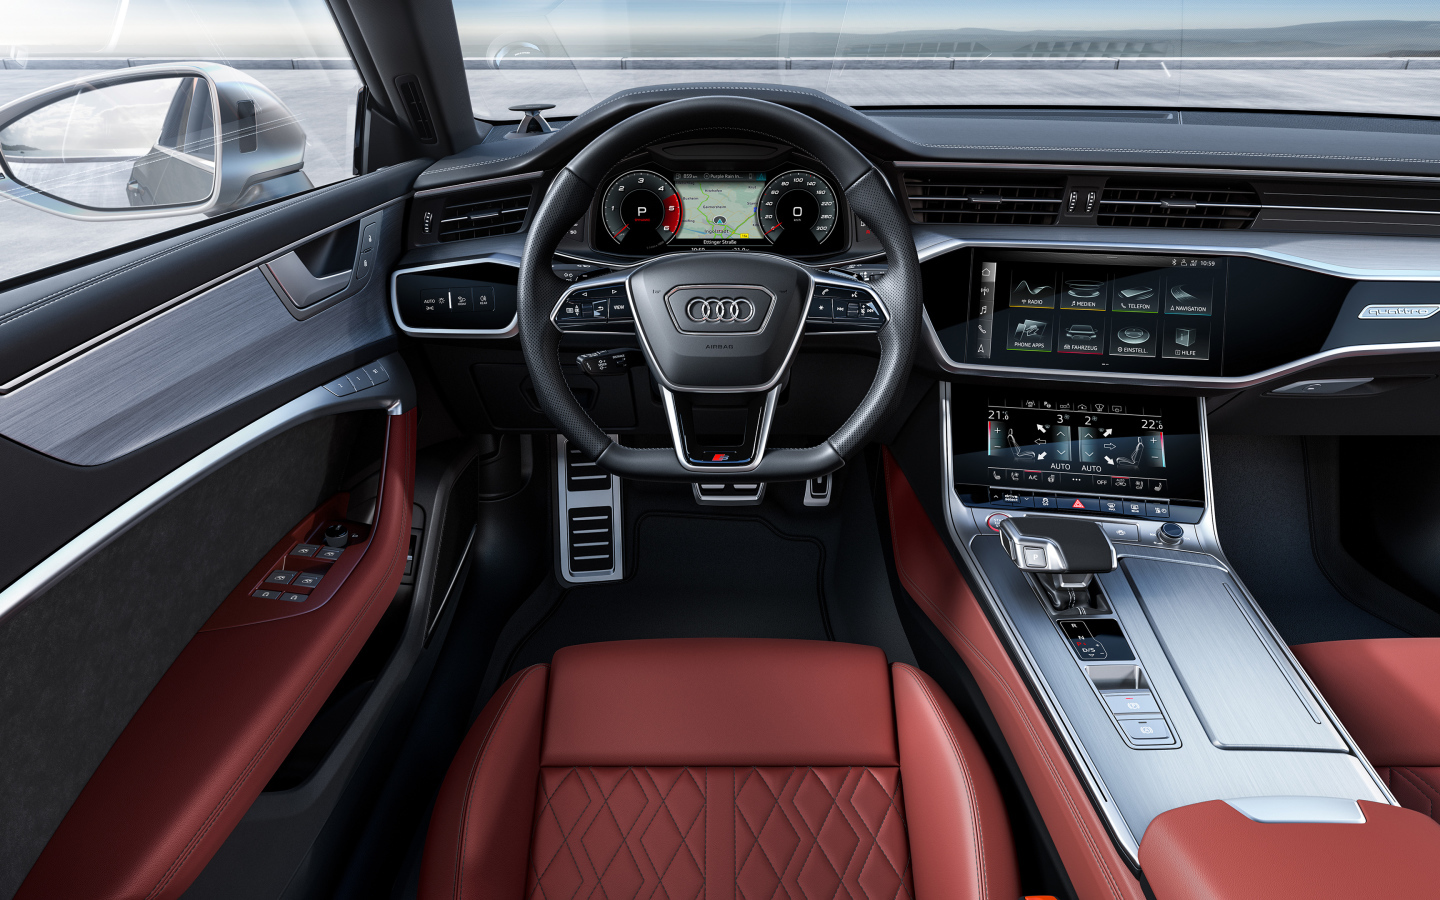 Expensive leather interior car 2018 Audi S7 Sportback TDI